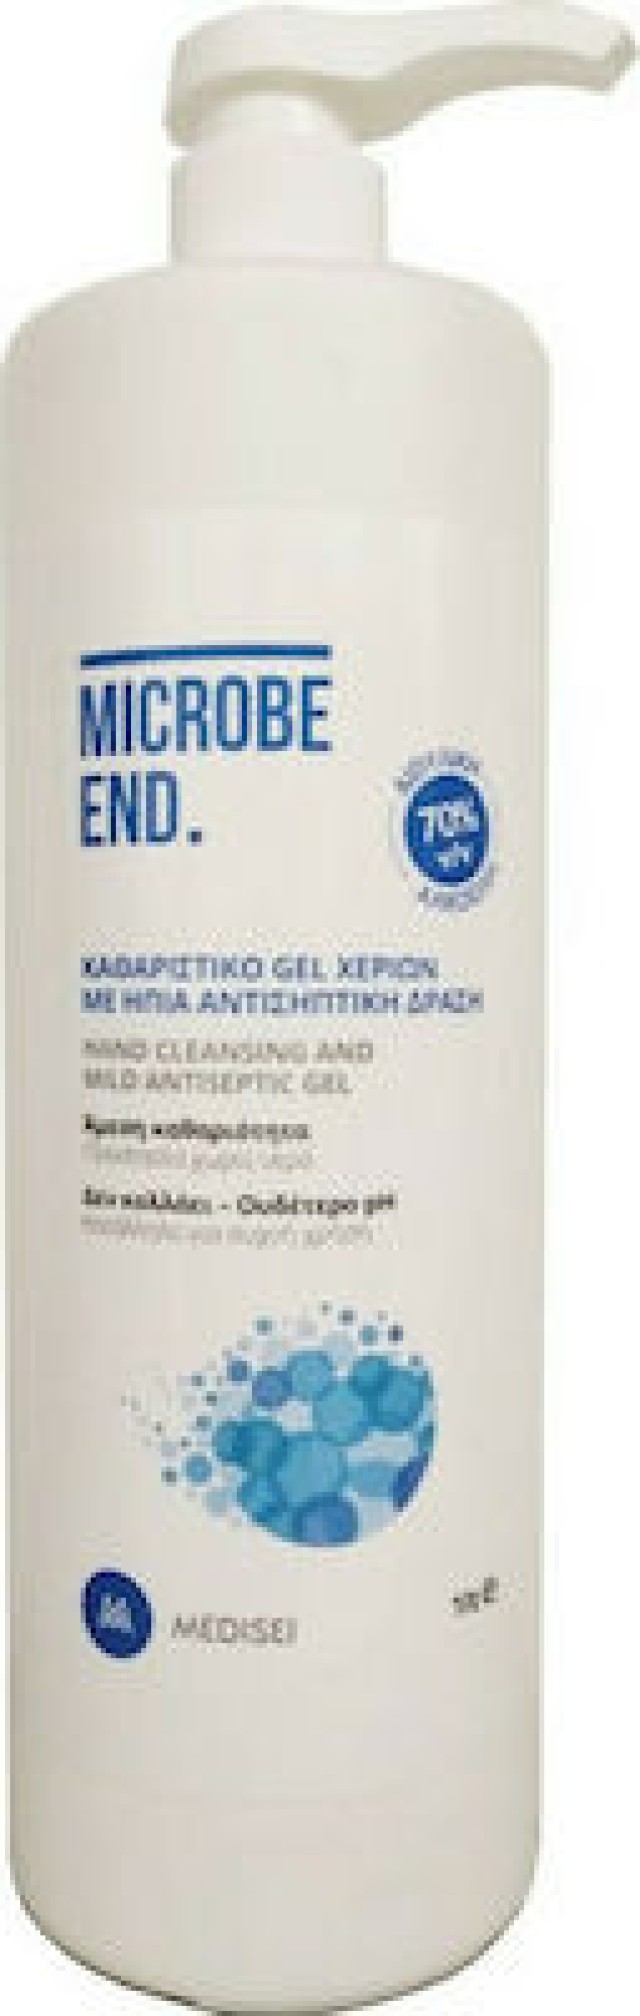 Medisei Microbe End Ήπιο Αντισηπτικό Καθαριστικό Gel Χεριών 70%, 1000ml